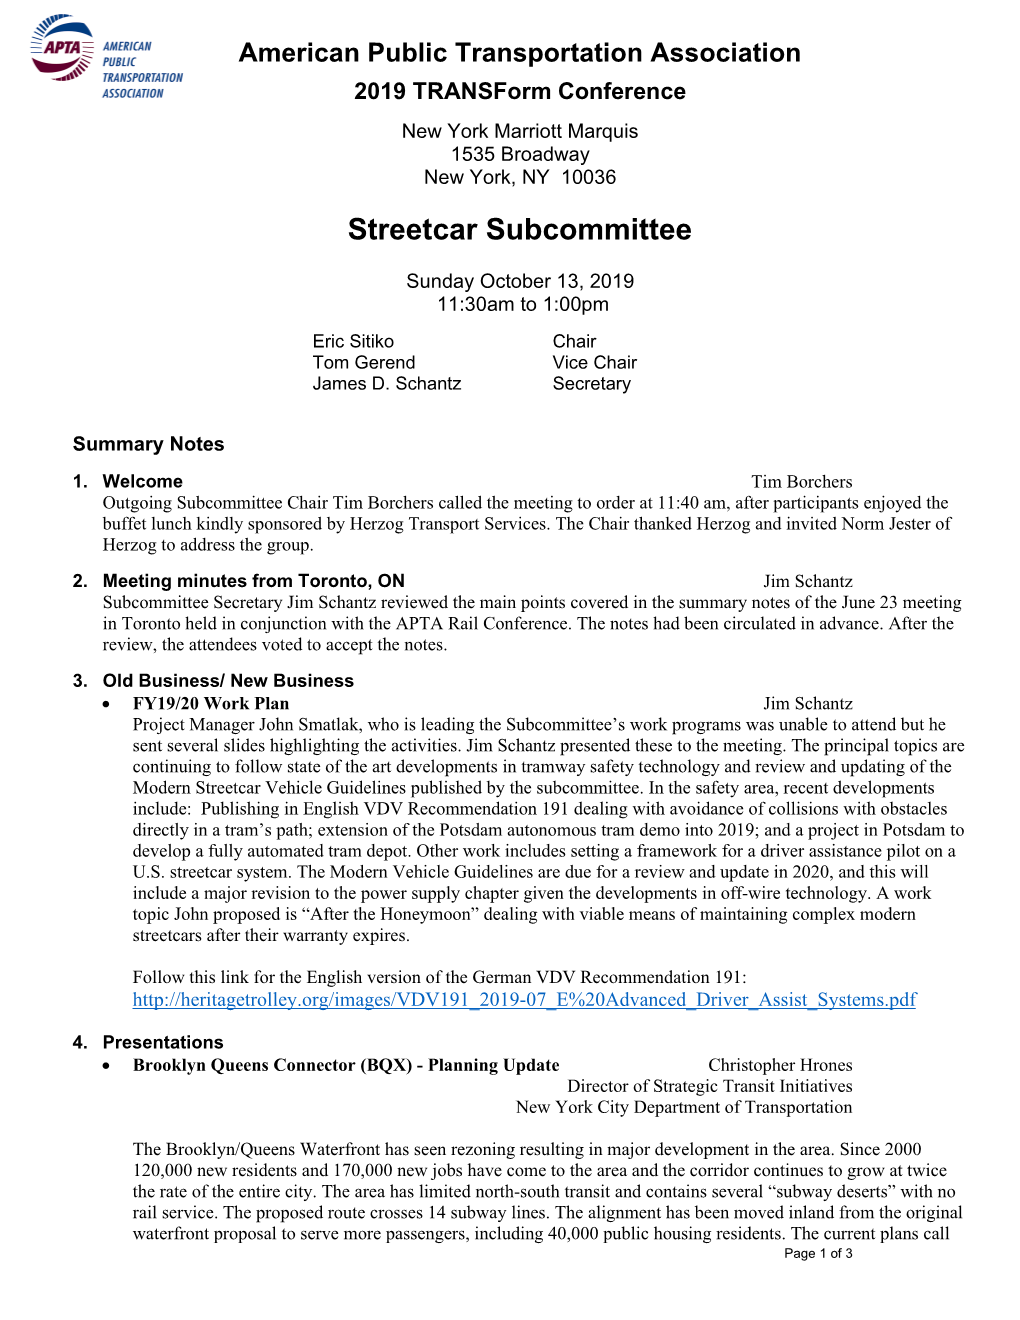 Streetcar Subcommittee